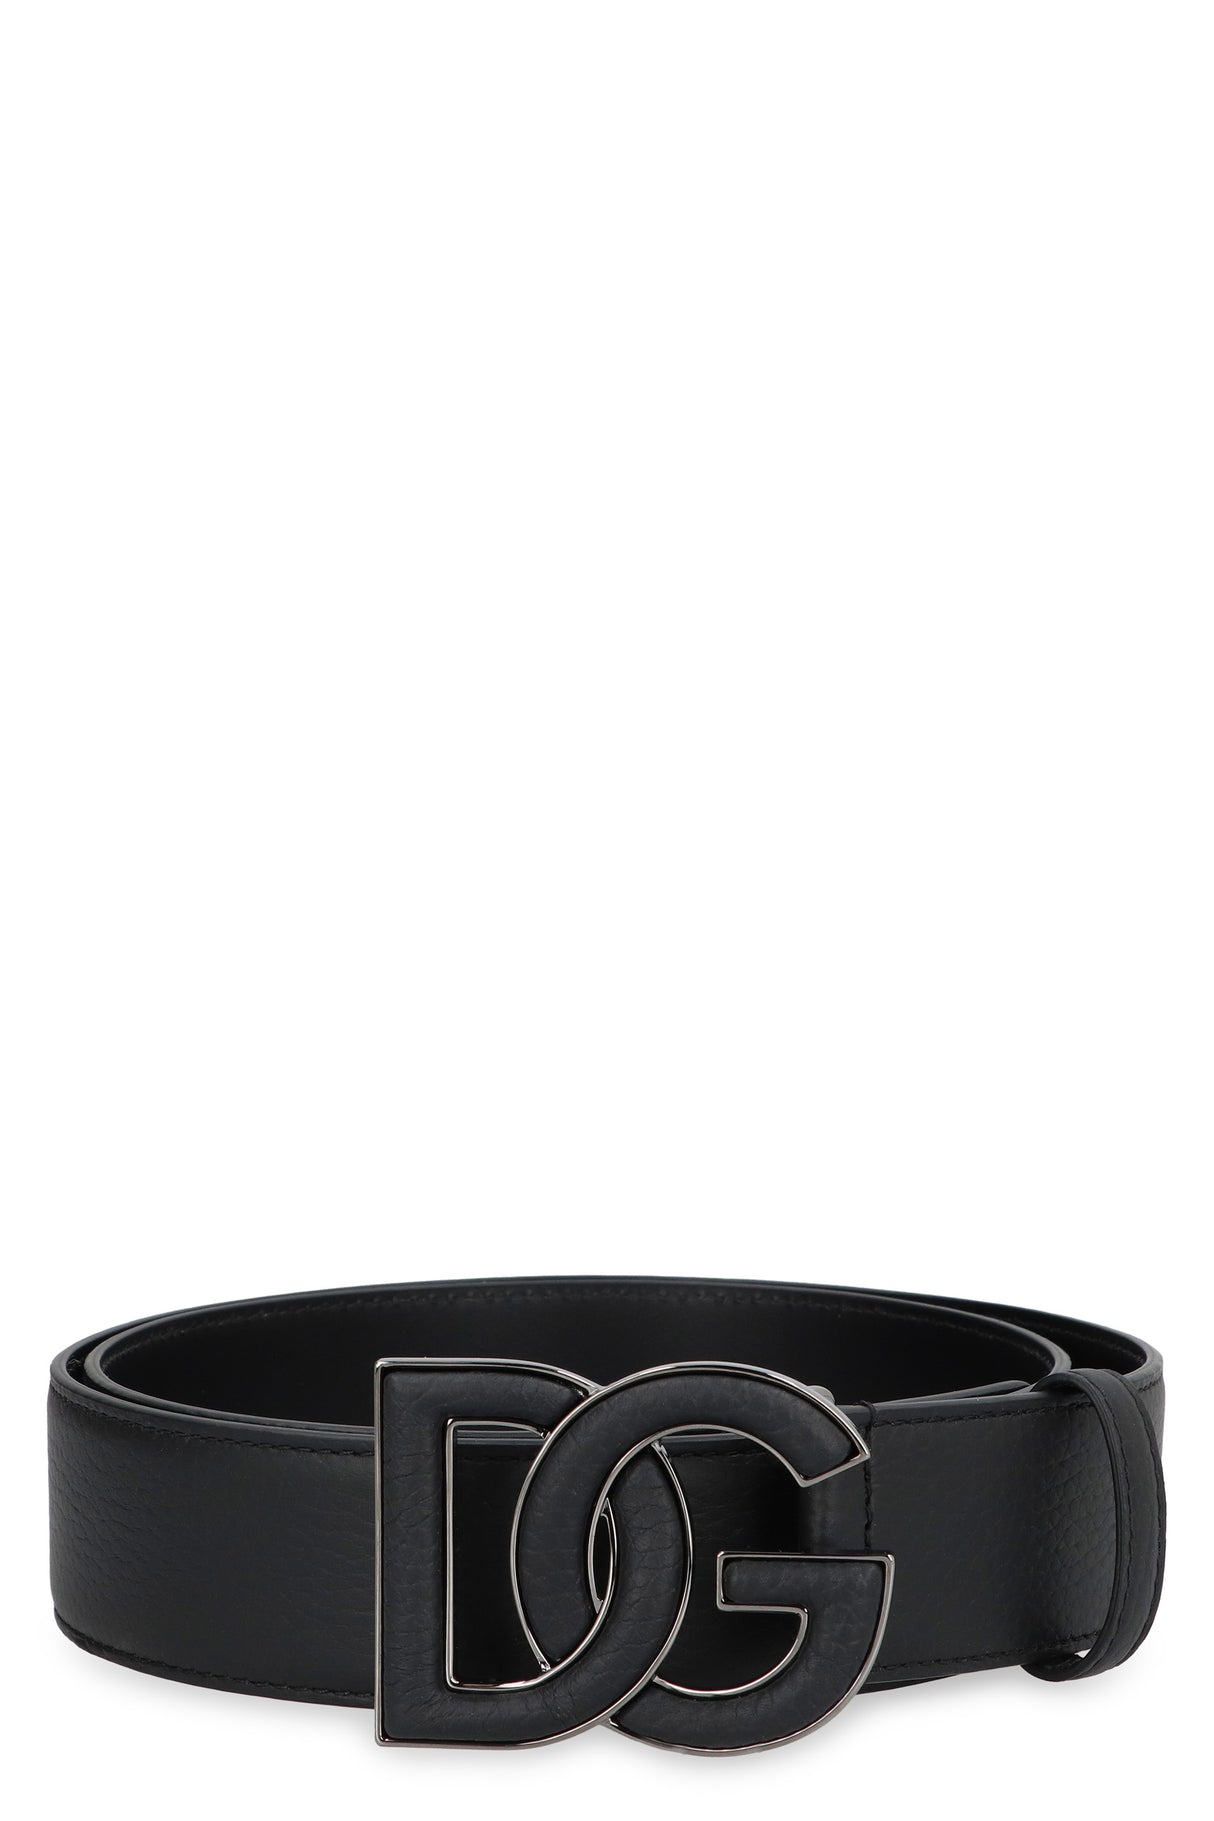 DOLCE & GABBANA Stylish Black Deer Print Belt with DG Logo Buckle for Men